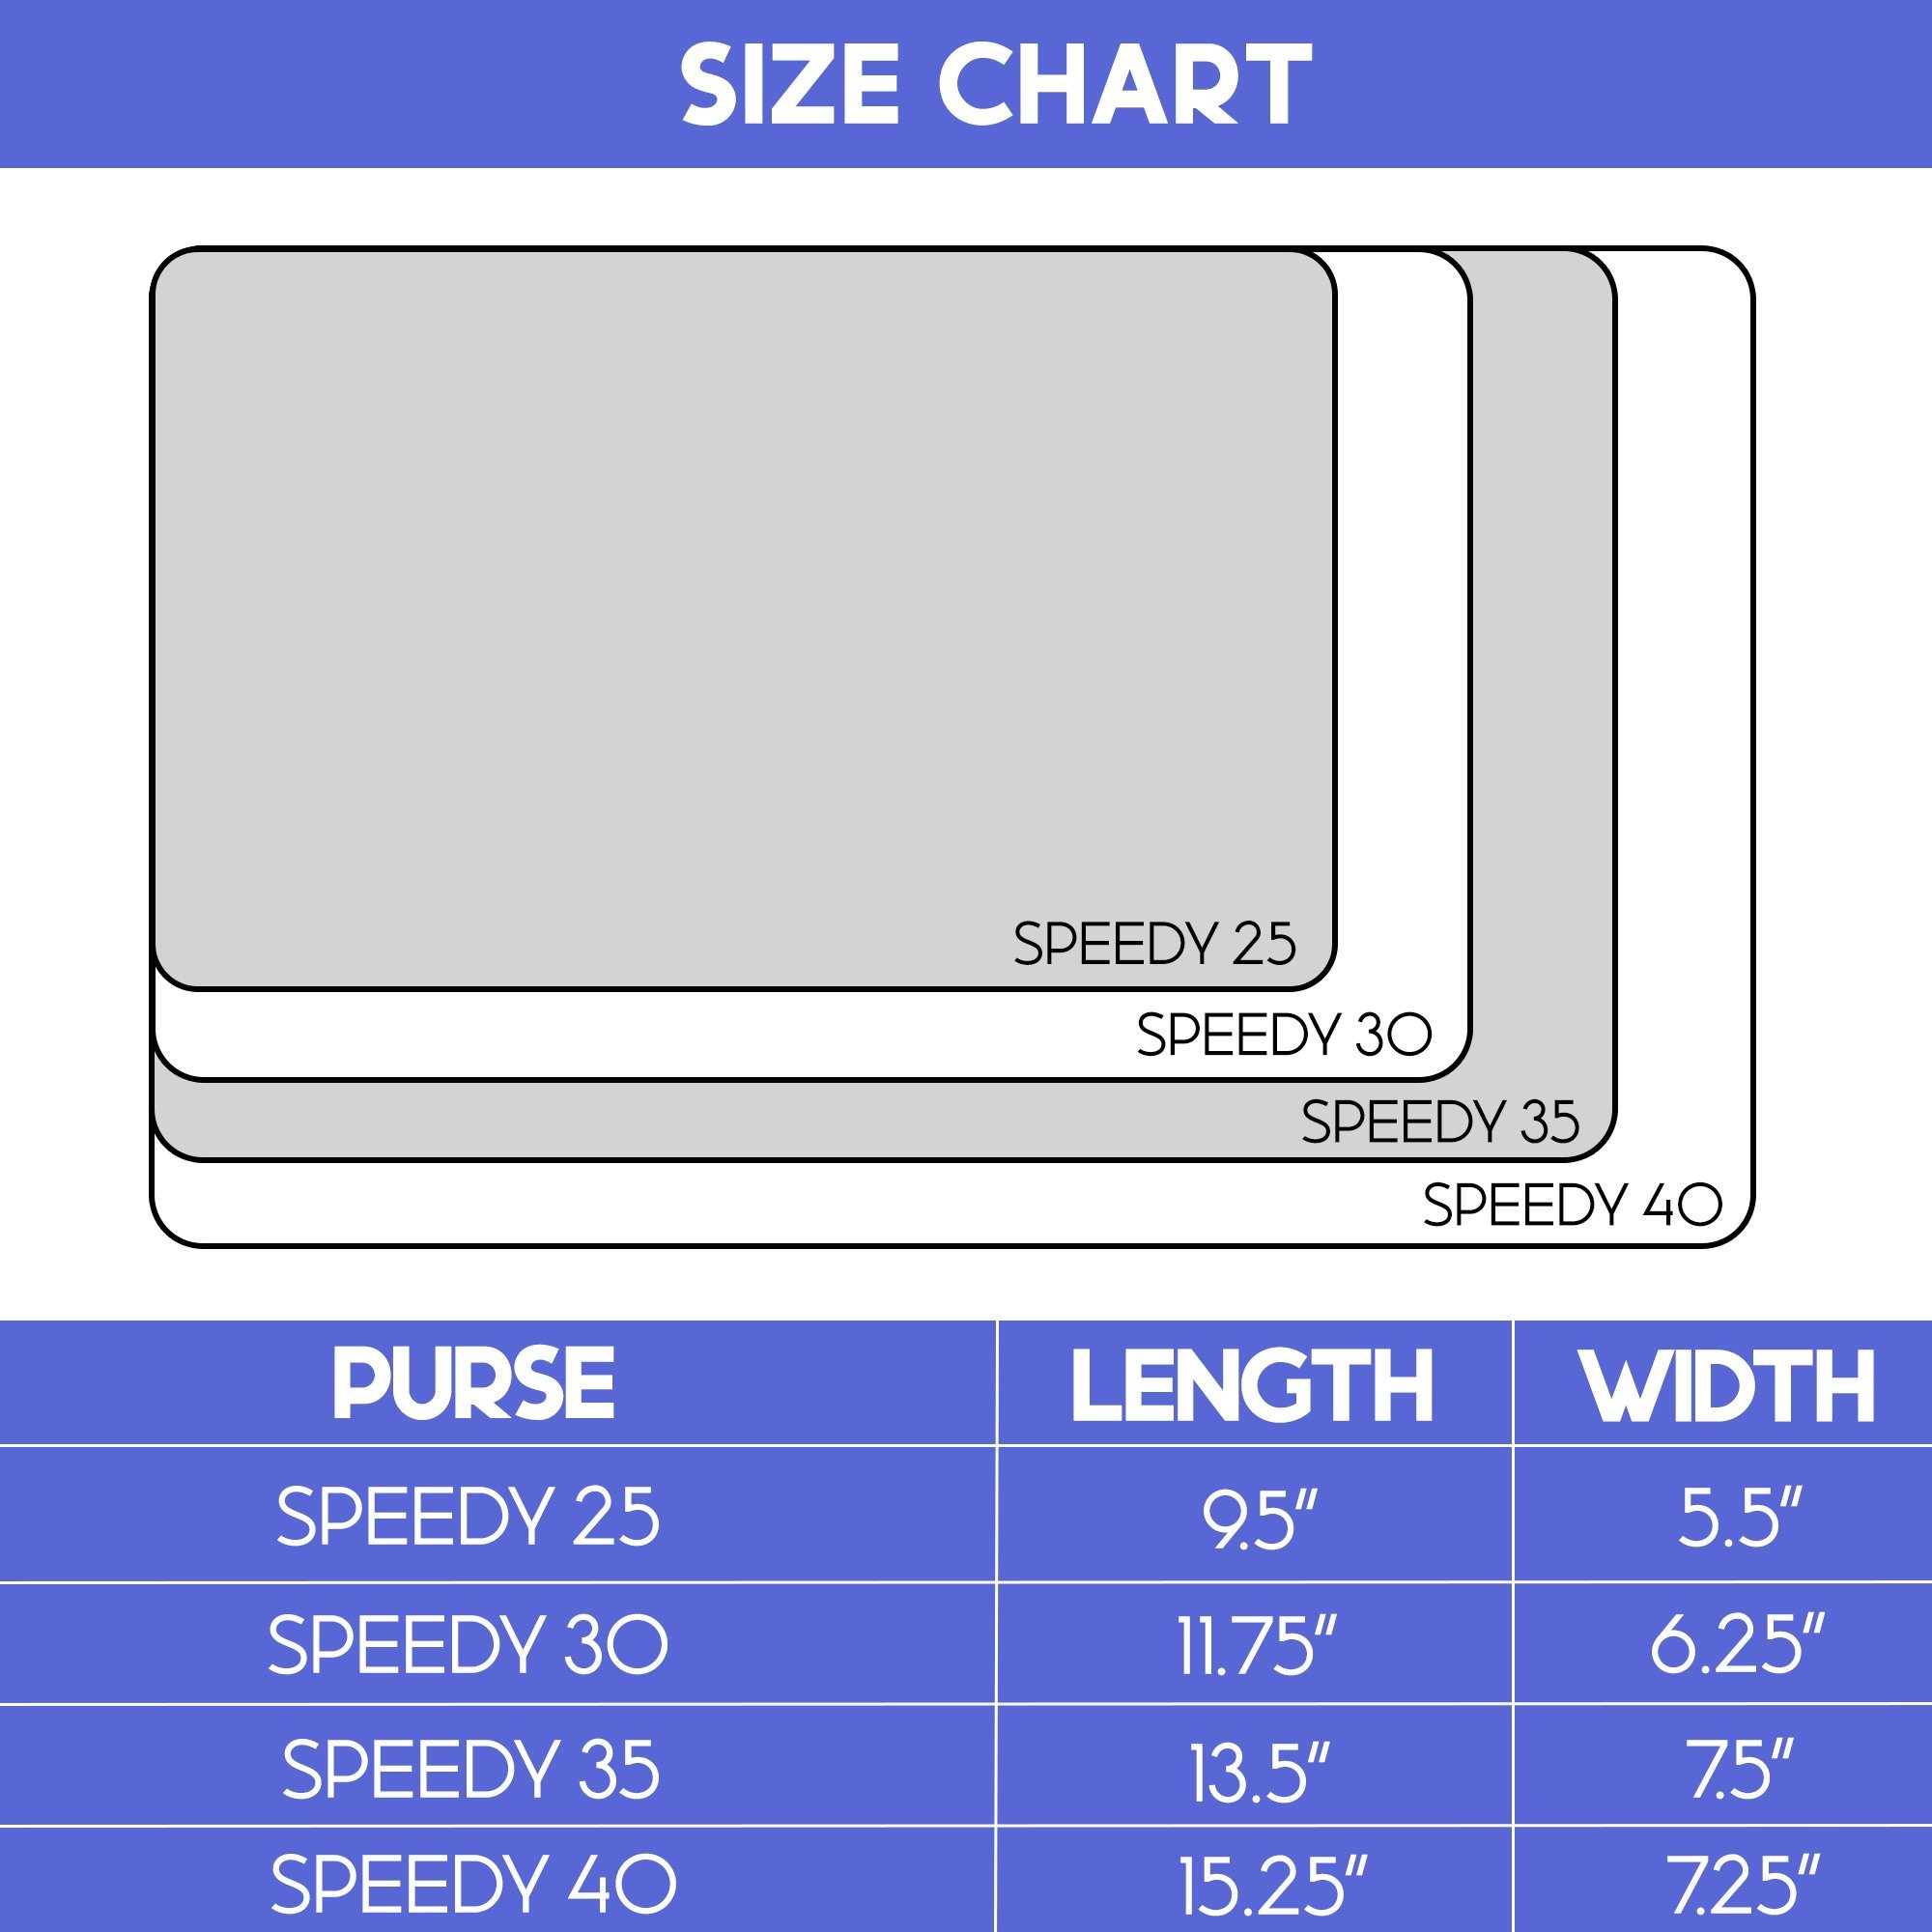 LV Speedy size comparison: 25, 30, 35, and 40.